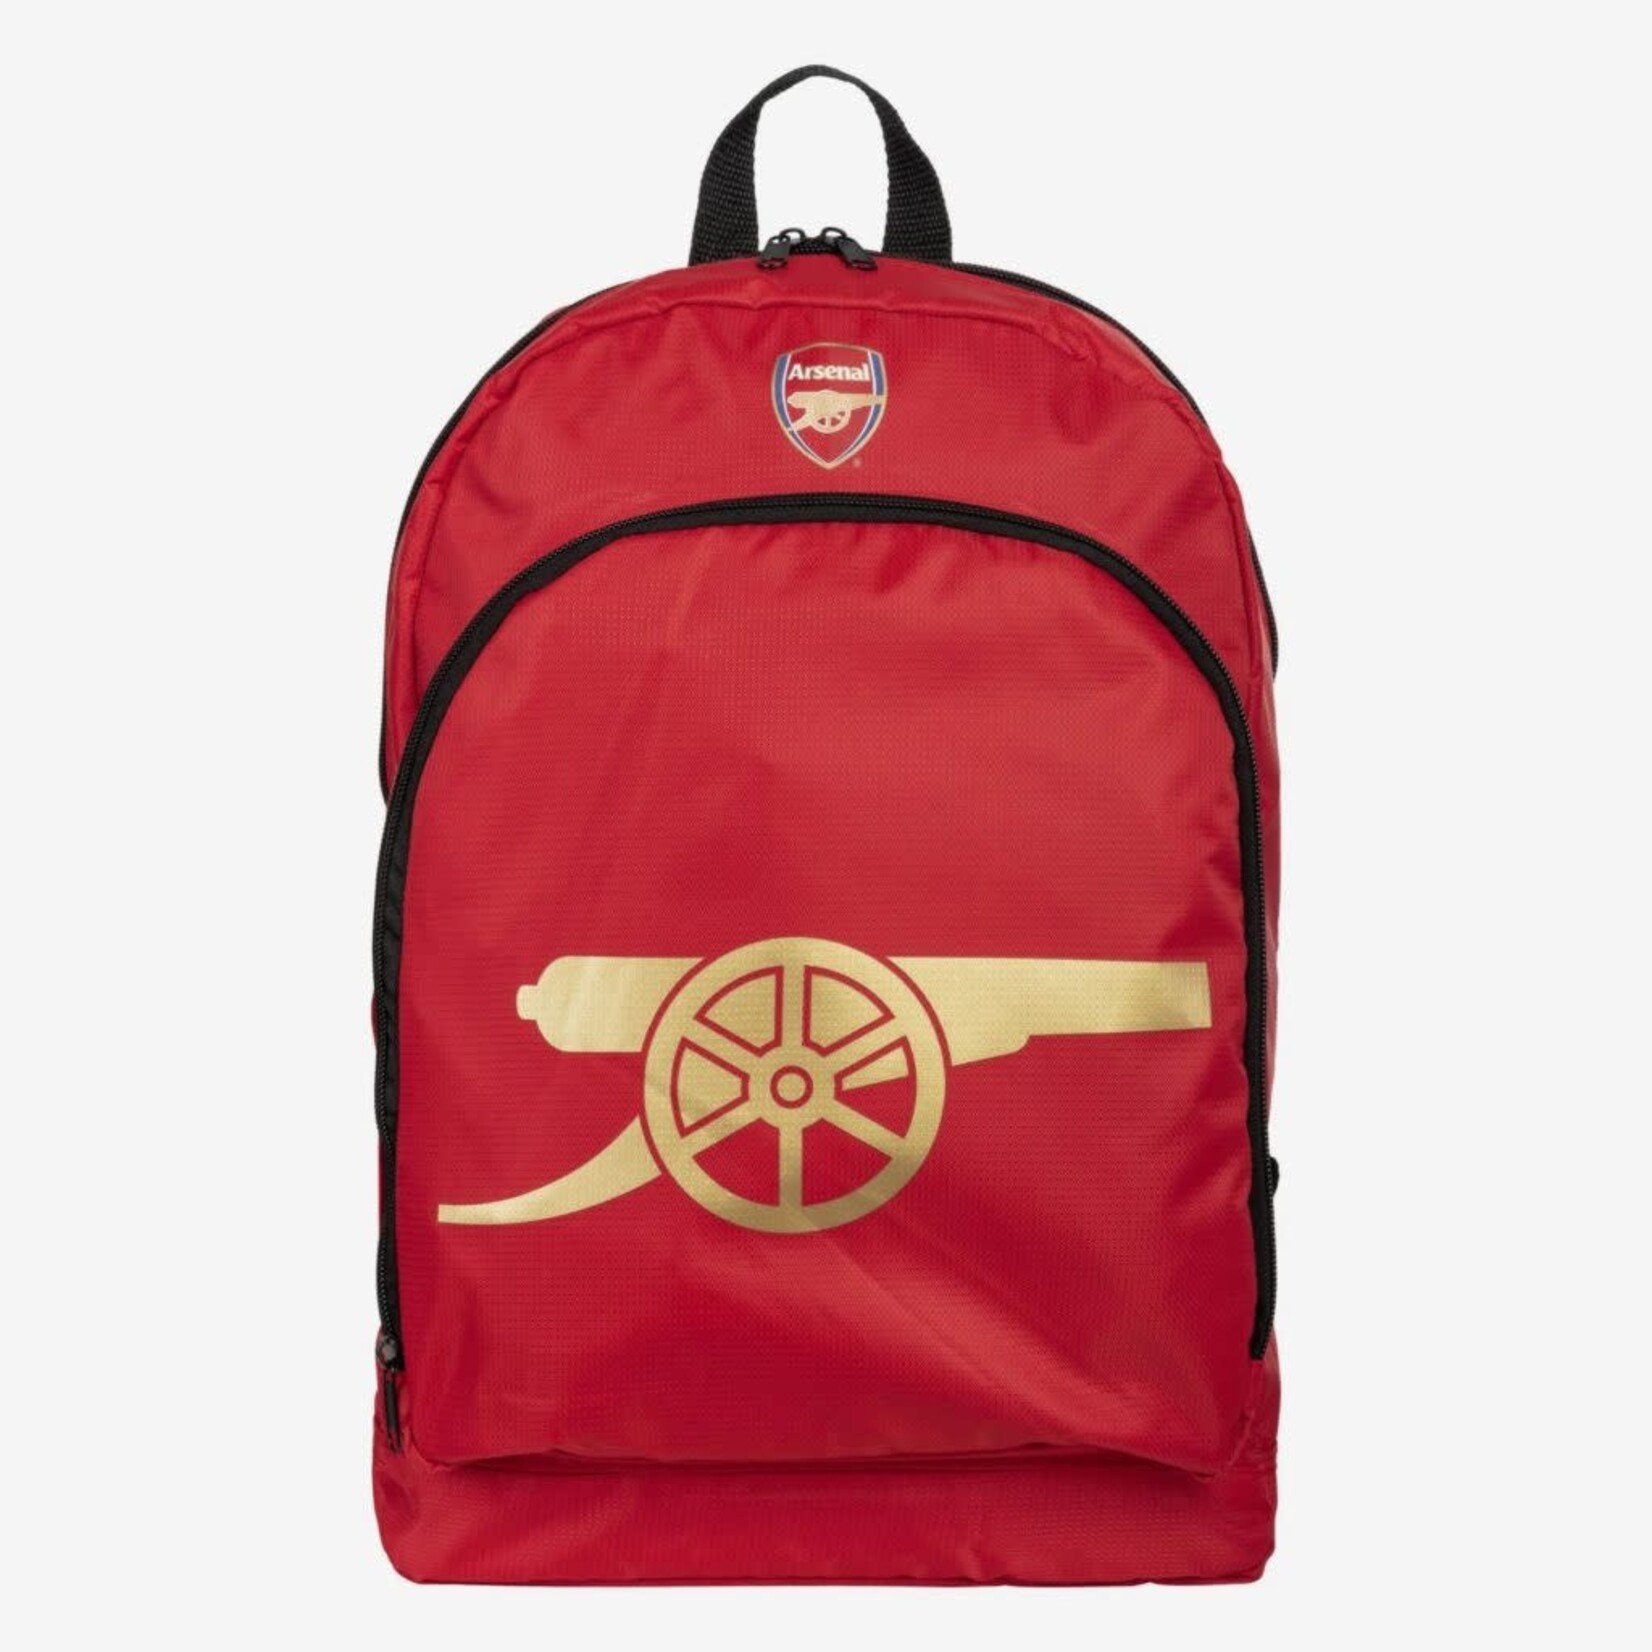 Mimi Imports Arsenal React Backpack